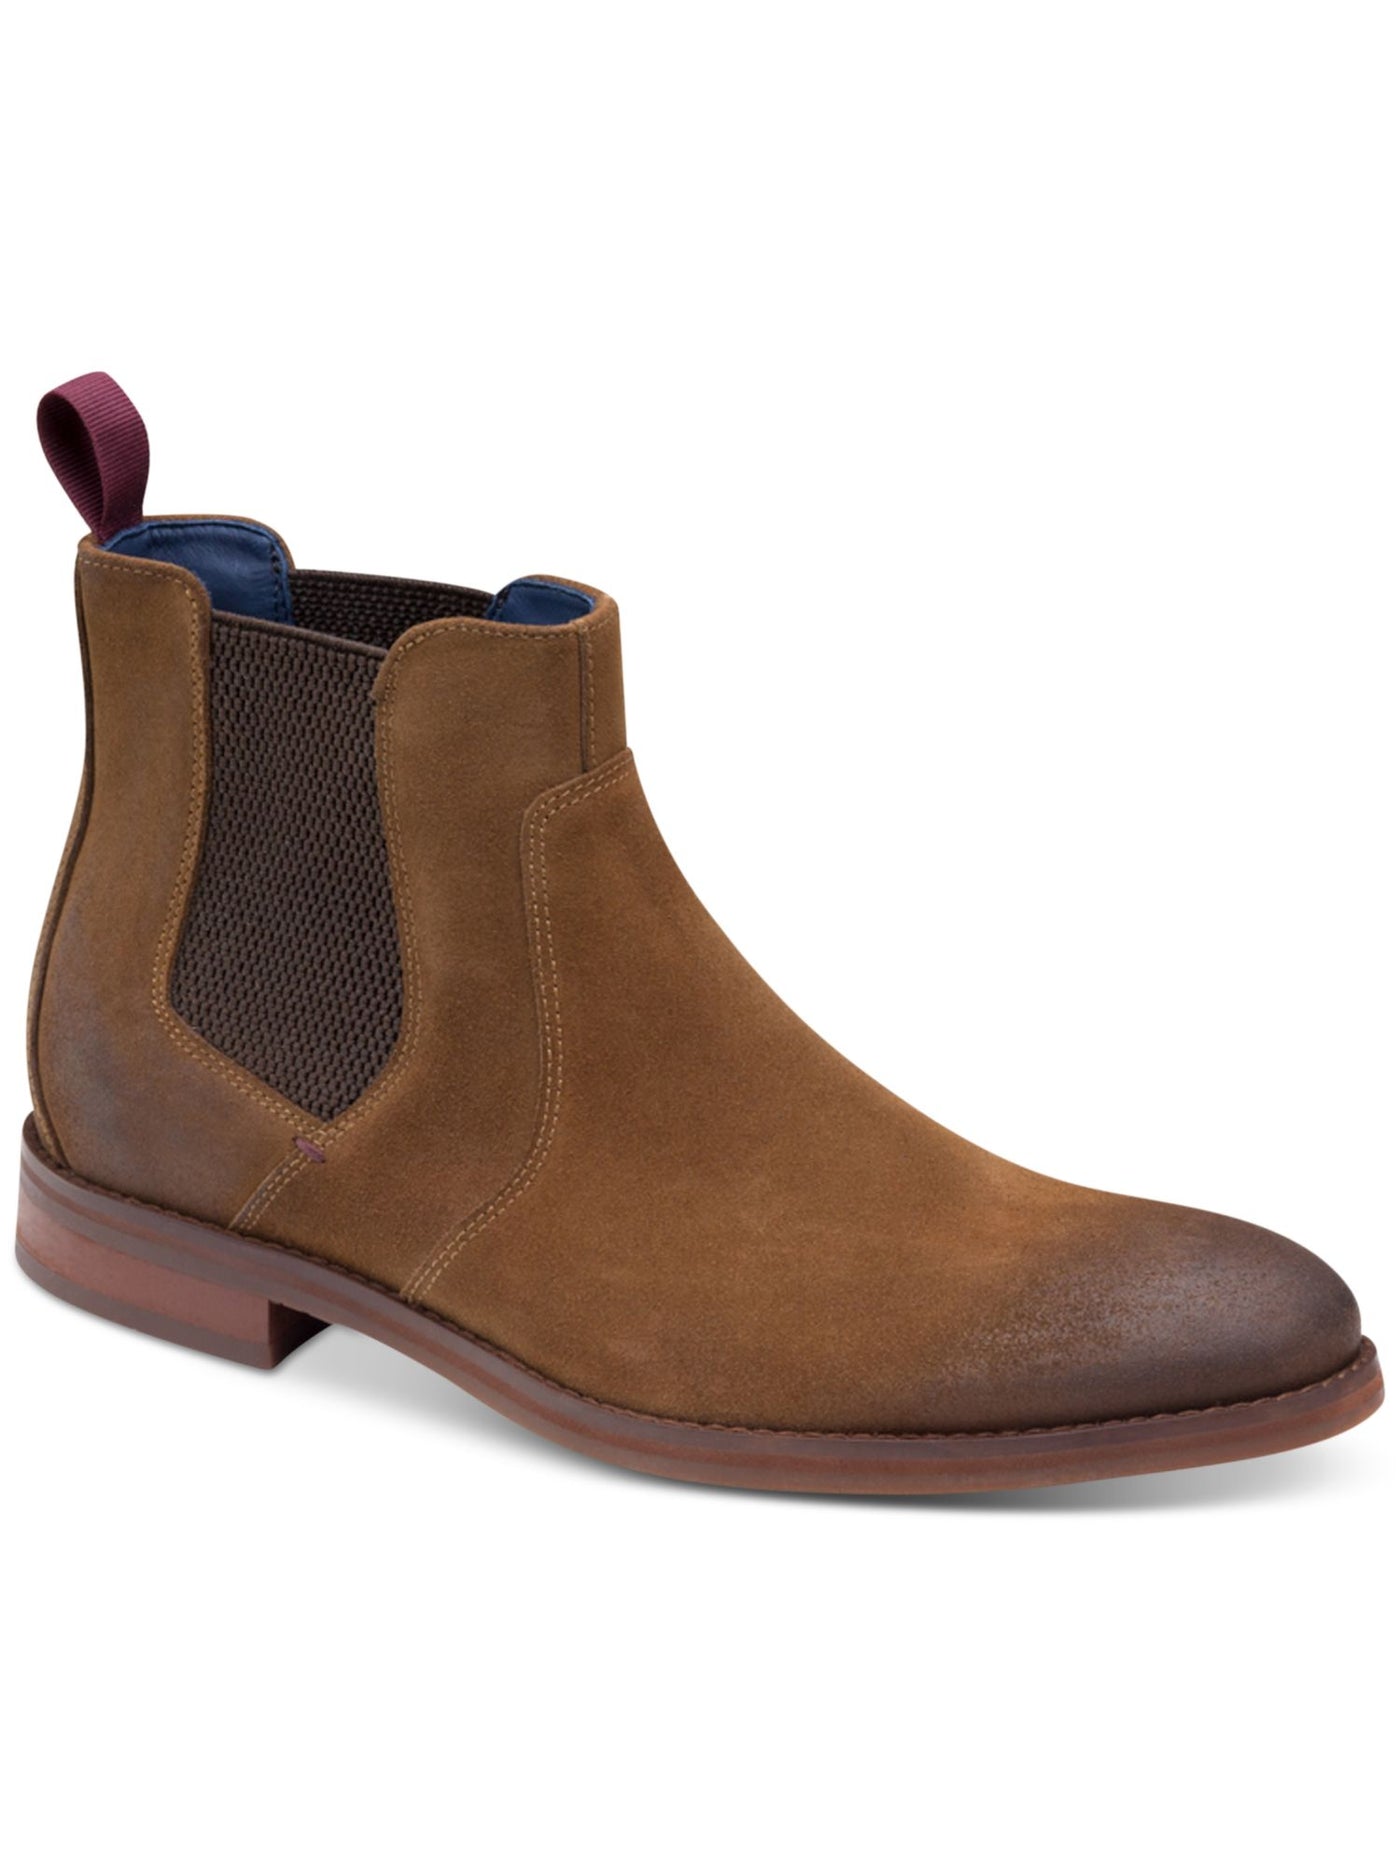 JOHNSTON & MURPHY Mens Brown Goring Comfort Danby Round Toe Block Heel Leather Boots 10 M